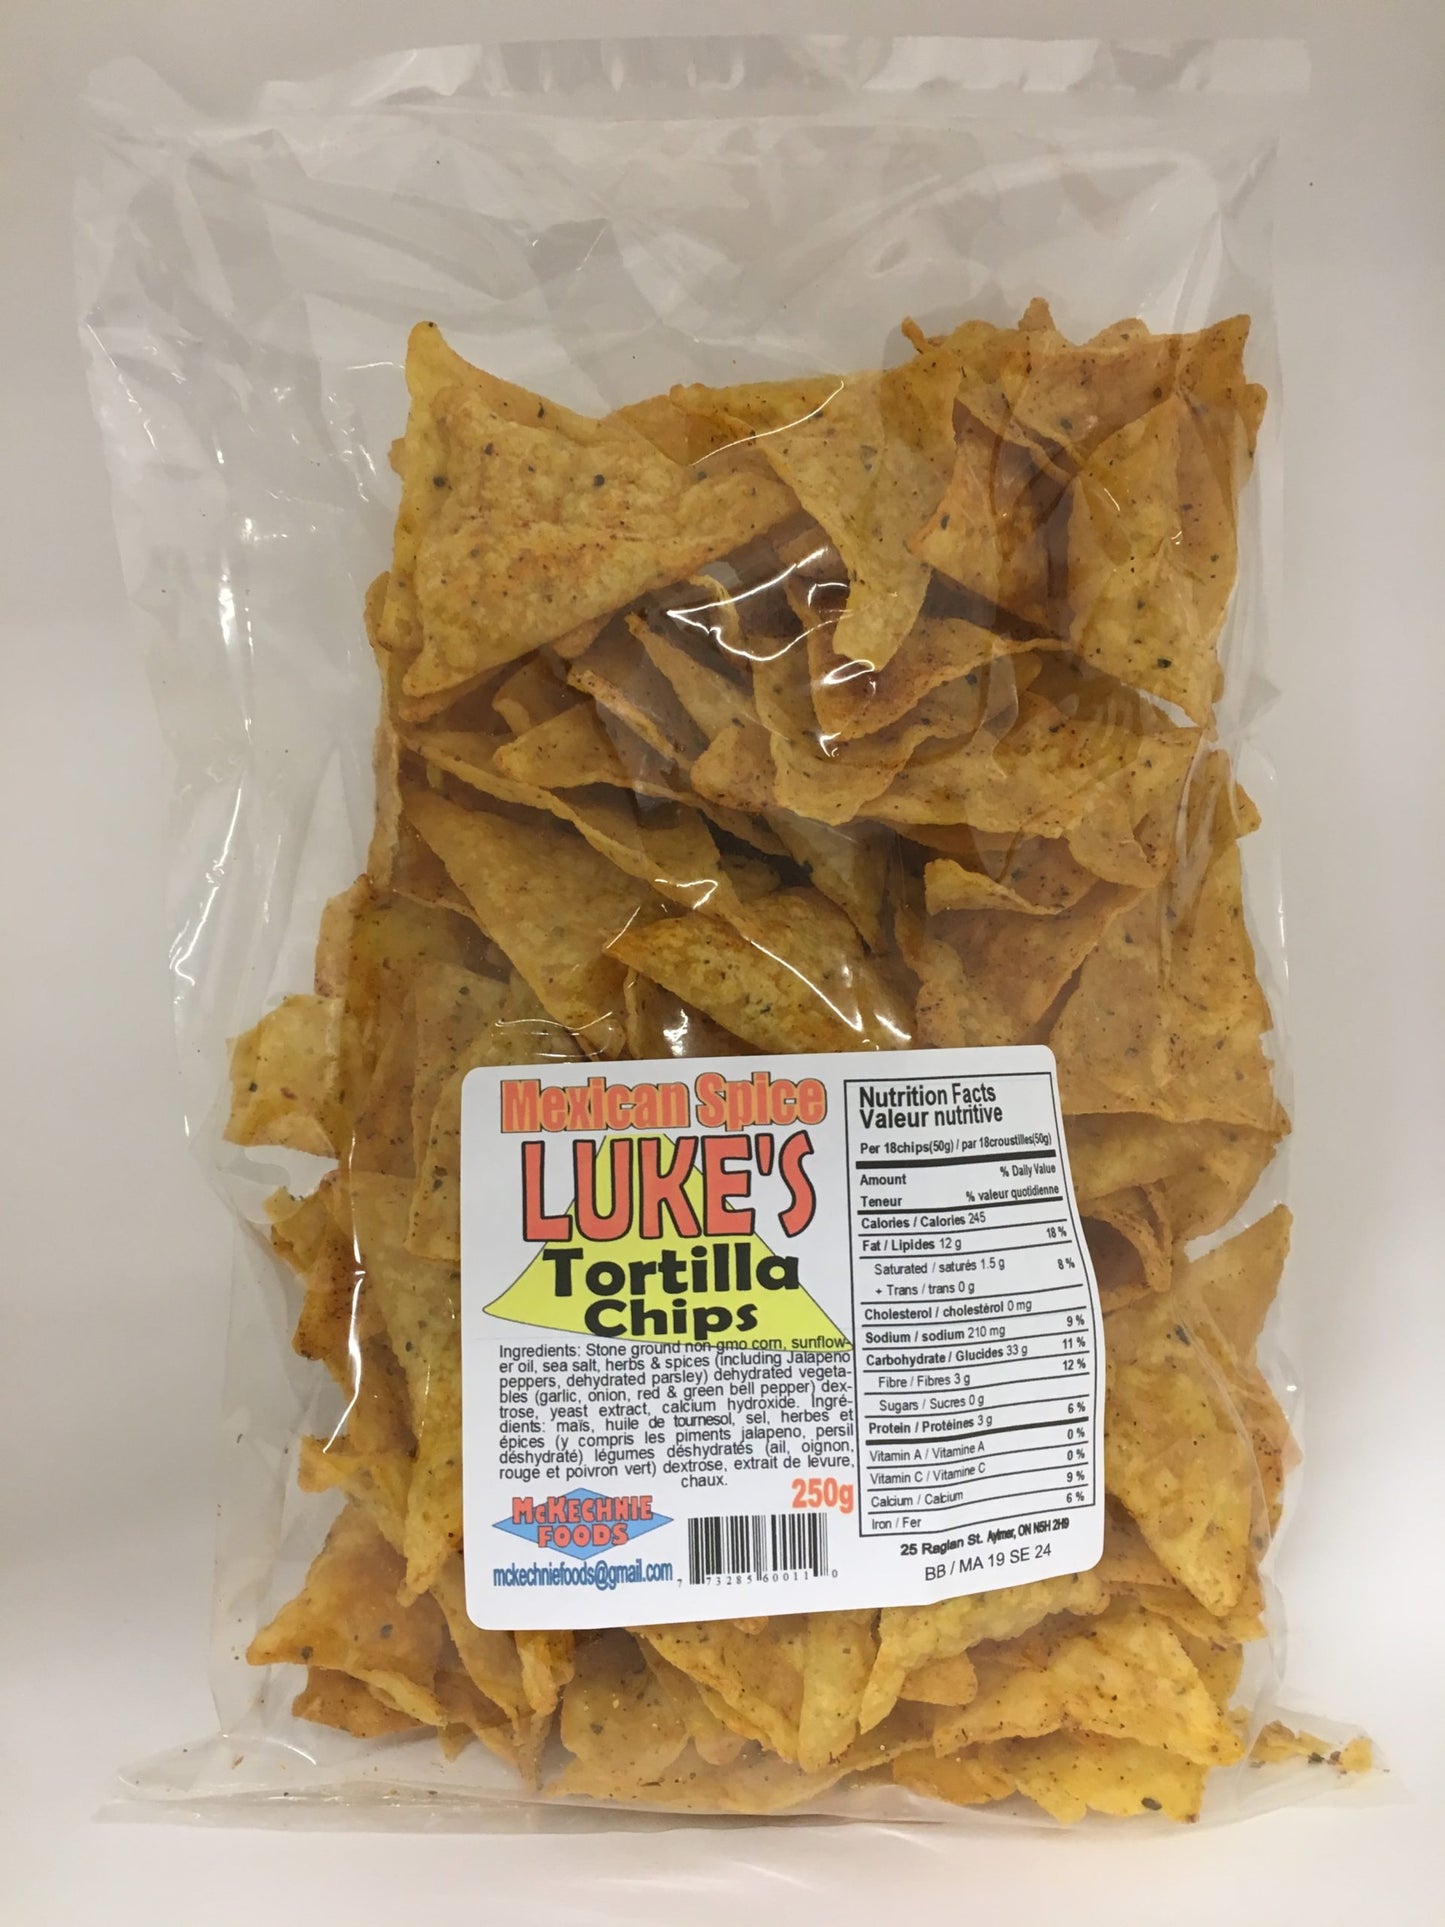 Luke's Tortilla Chips